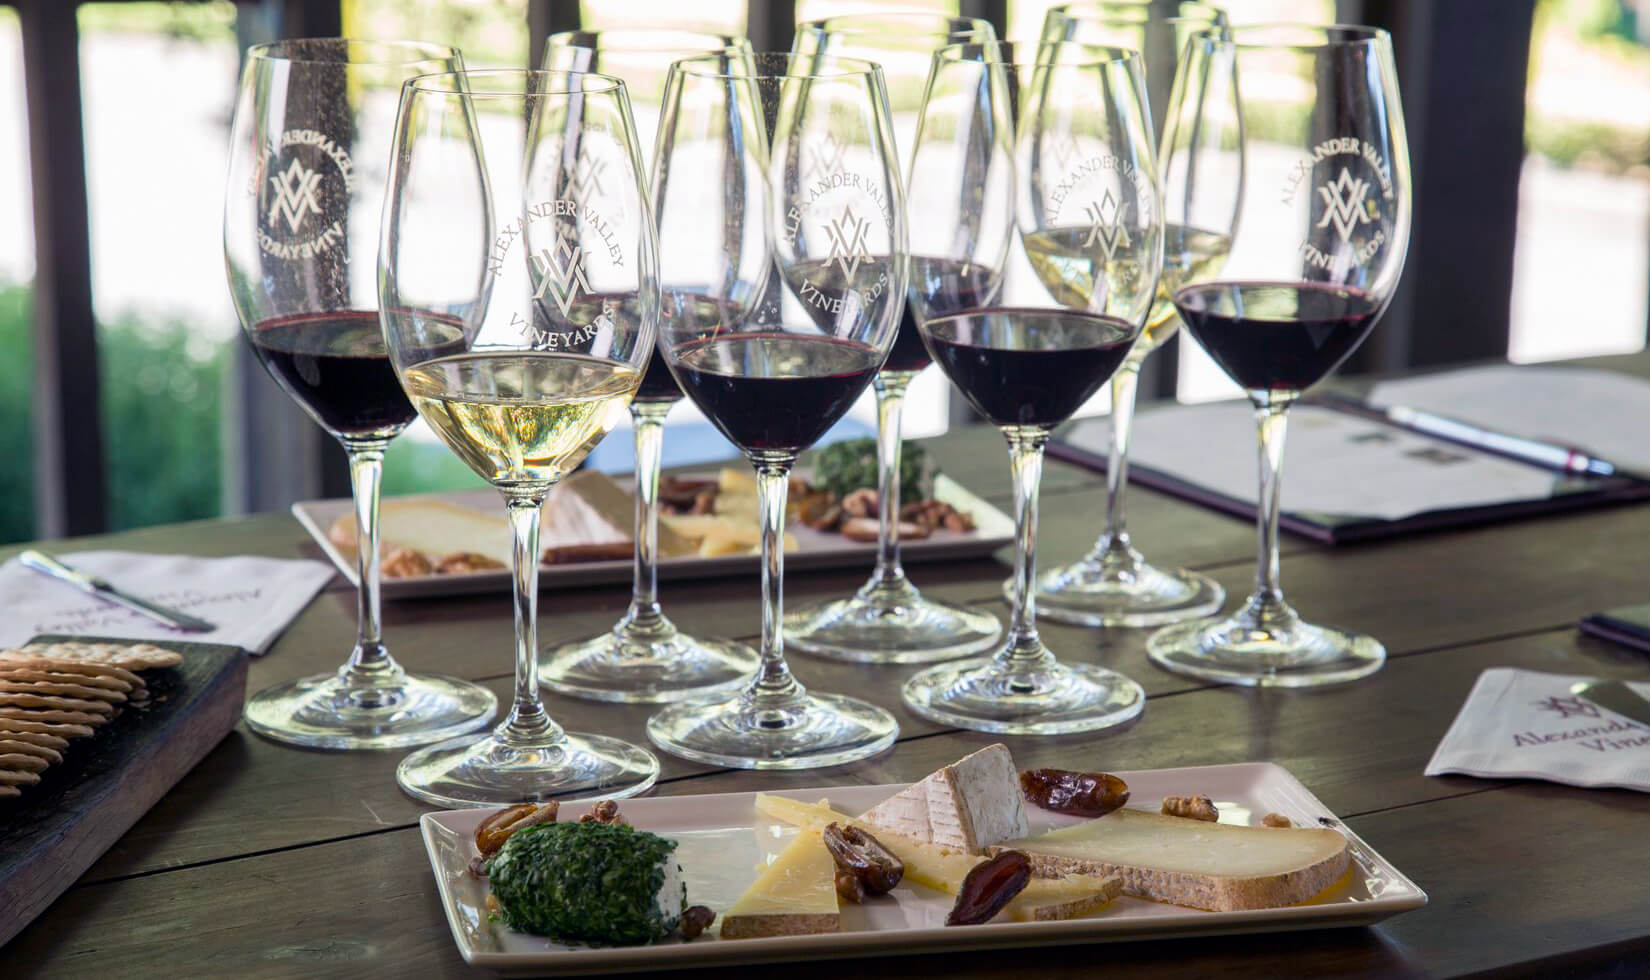 Alexander Valley Vineyards Wine and Cheese Tasting Plate